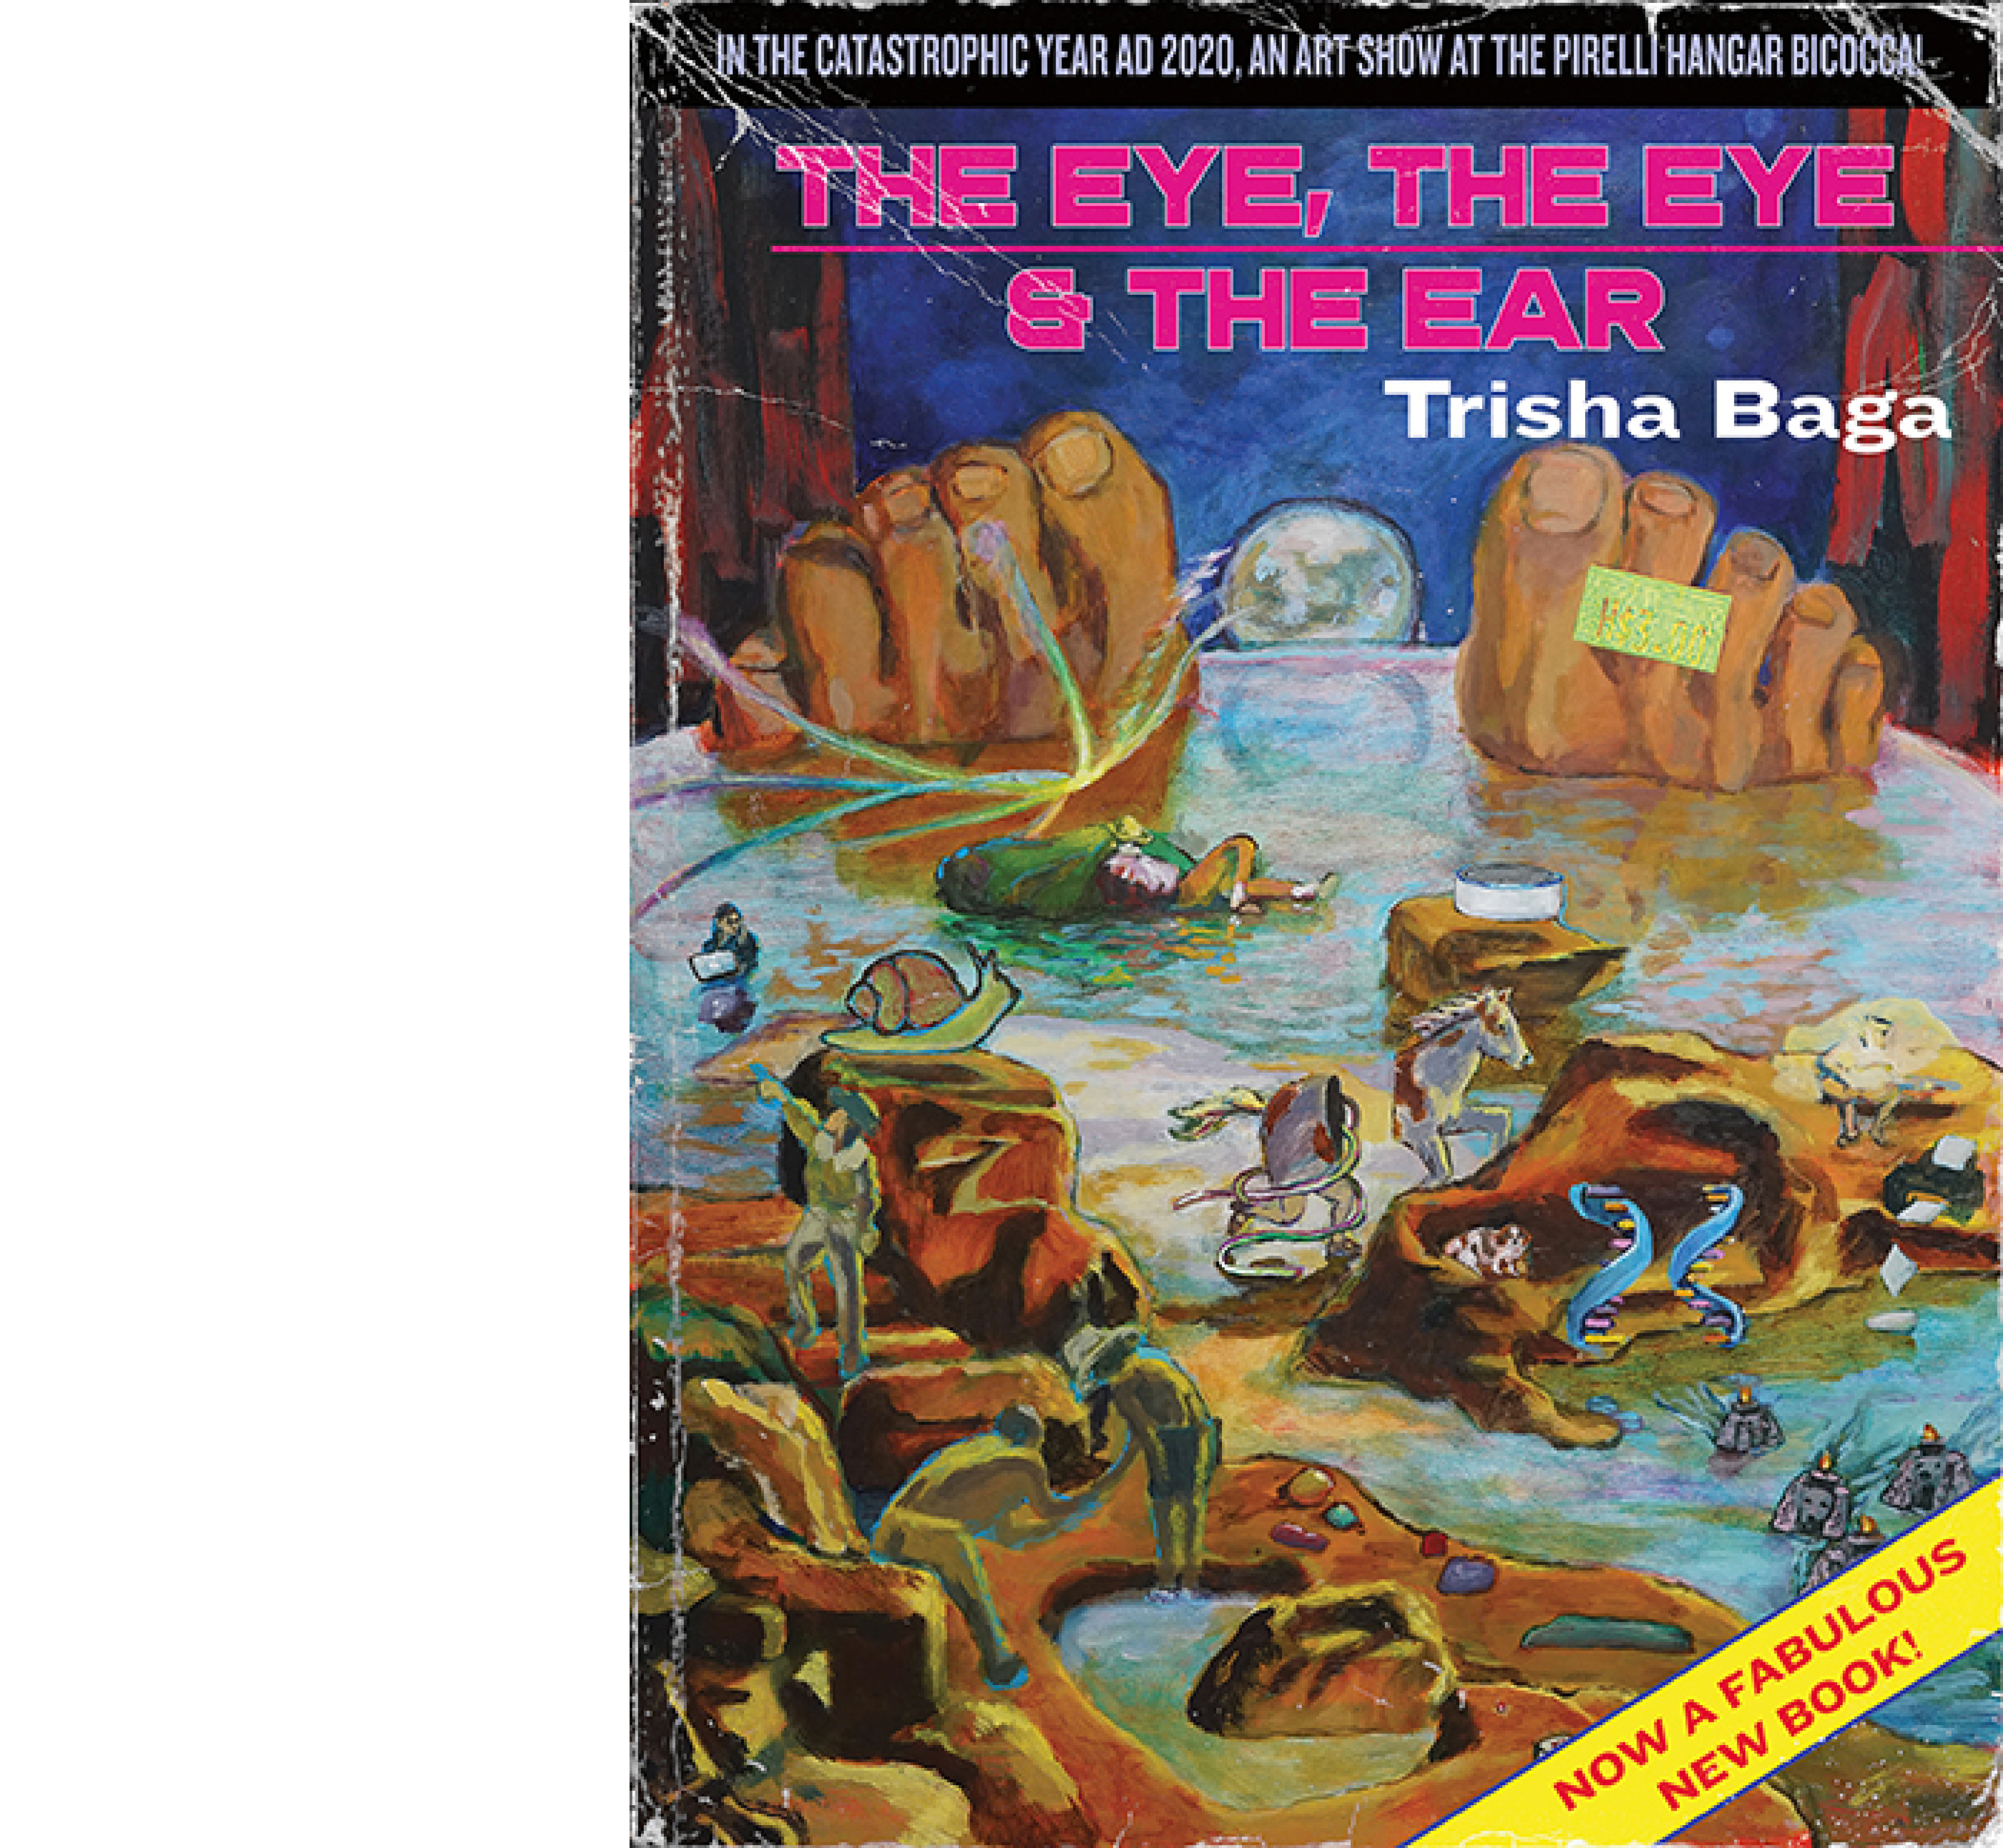 Trisha Baga - the eye, the eye and the ear - Viewing Room - Greene Naftali Viewing Room